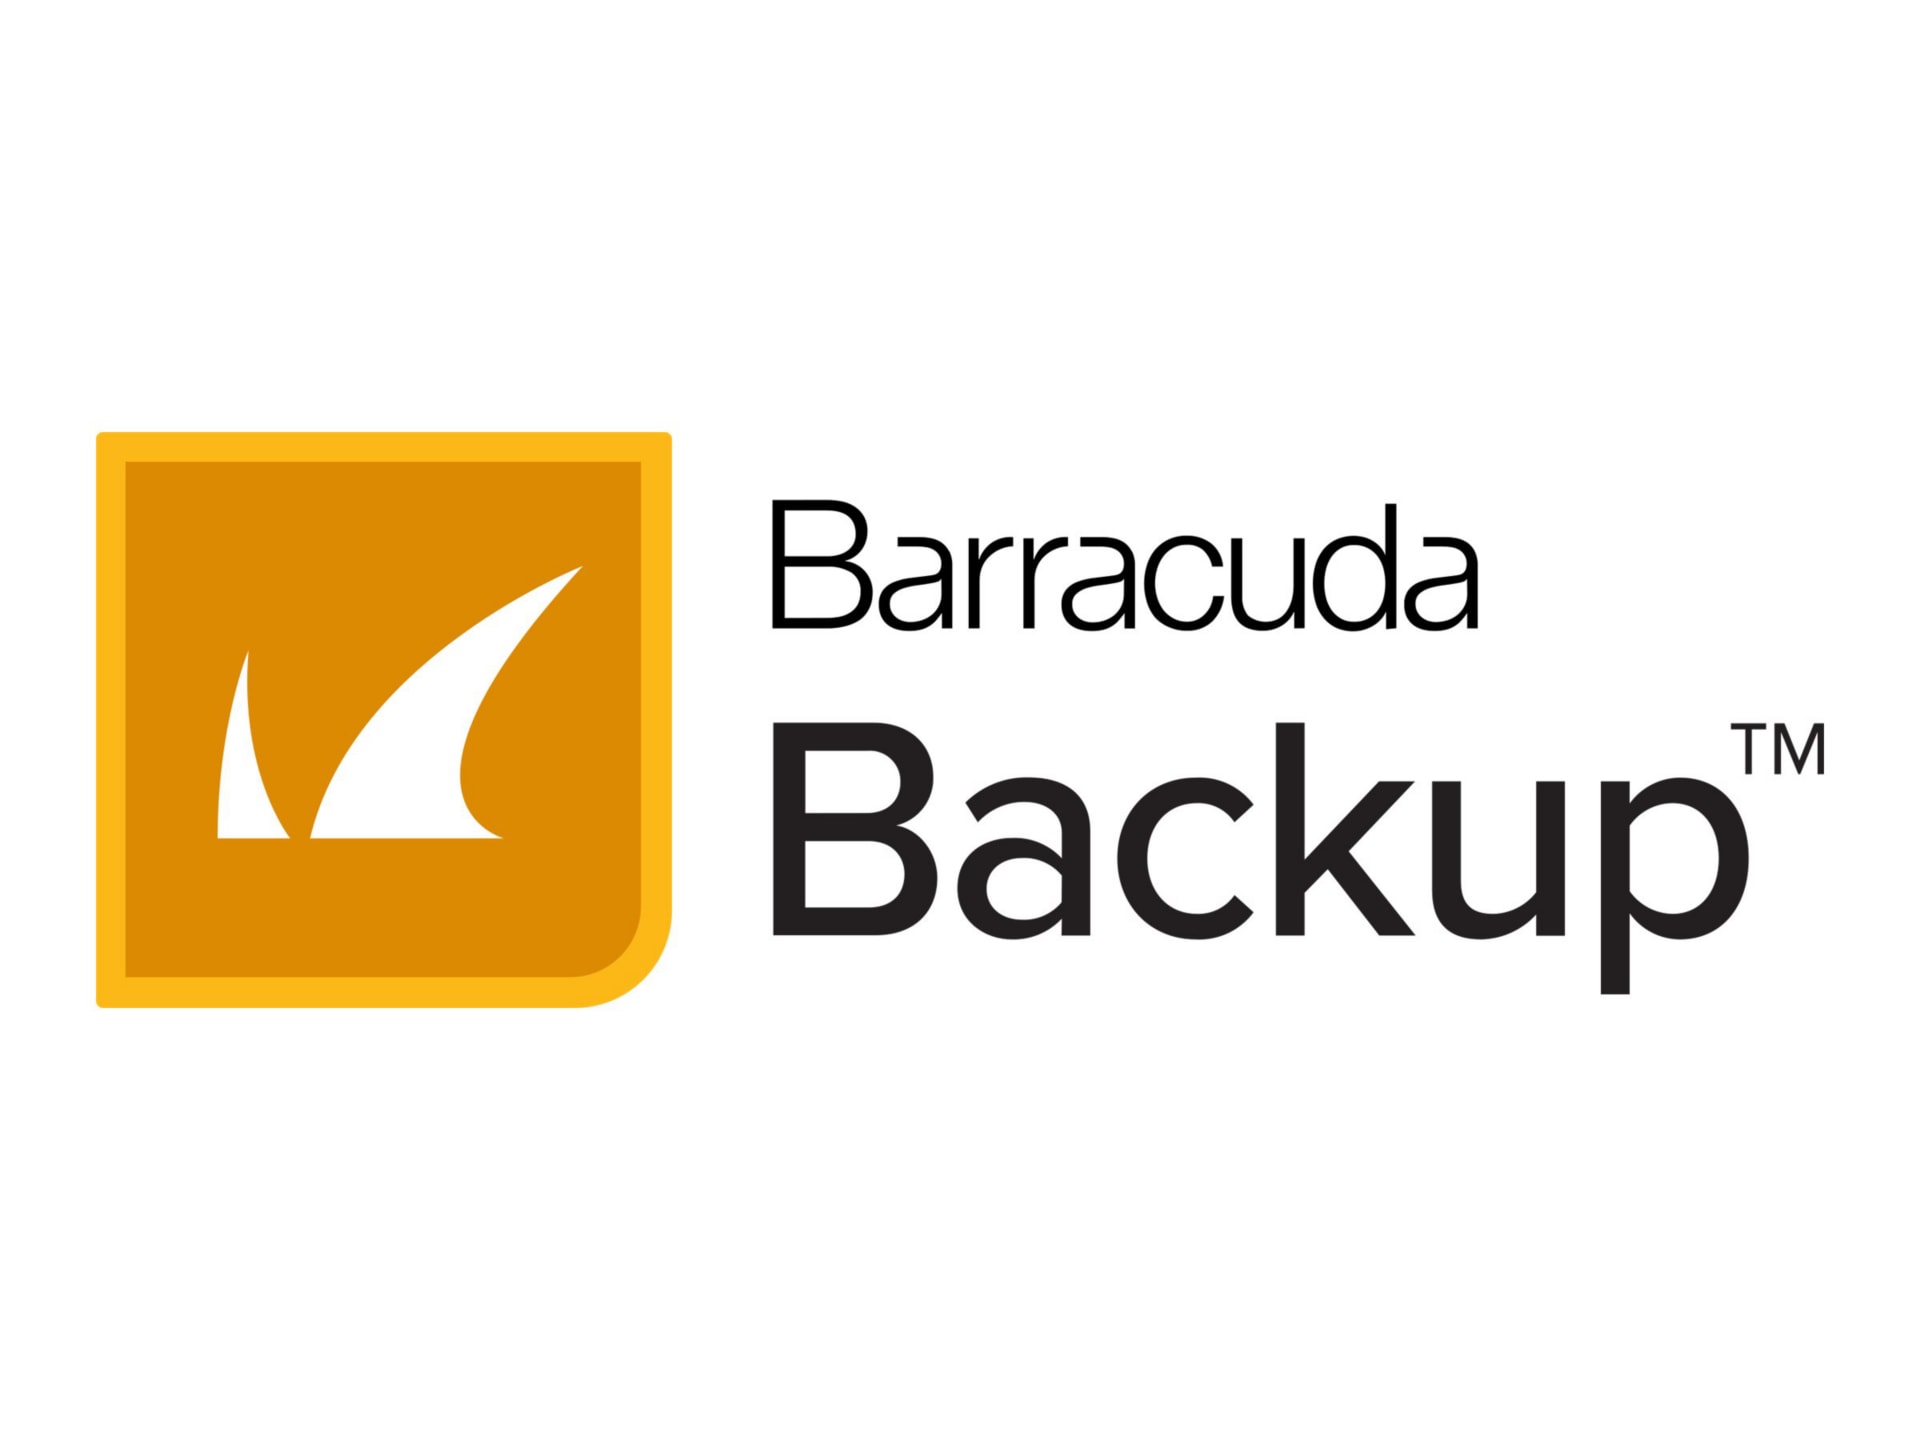 Barracuda Backup Vx - subscription license (1 month) - 1 TB cloud storage s